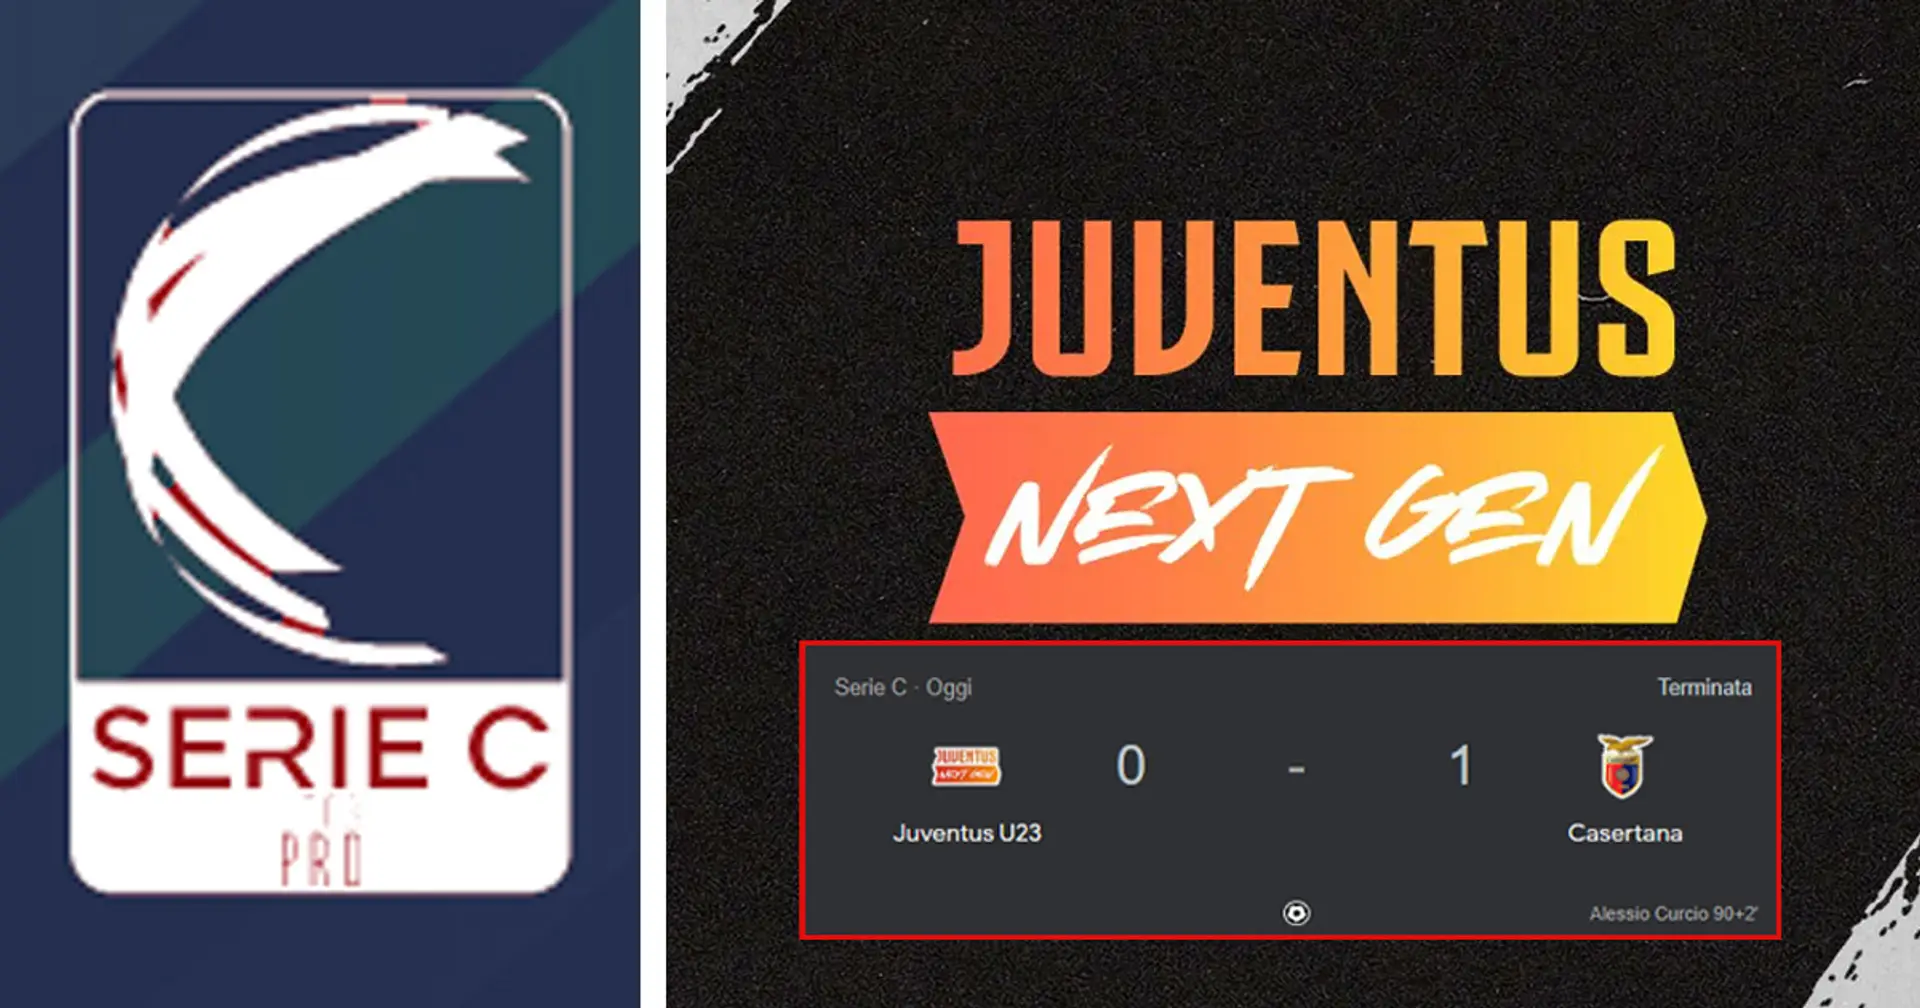 FLASH| Playoff Serie C, Juventus Next Gen  beffata al 92' dalla Casertana: sintesi e tabellino